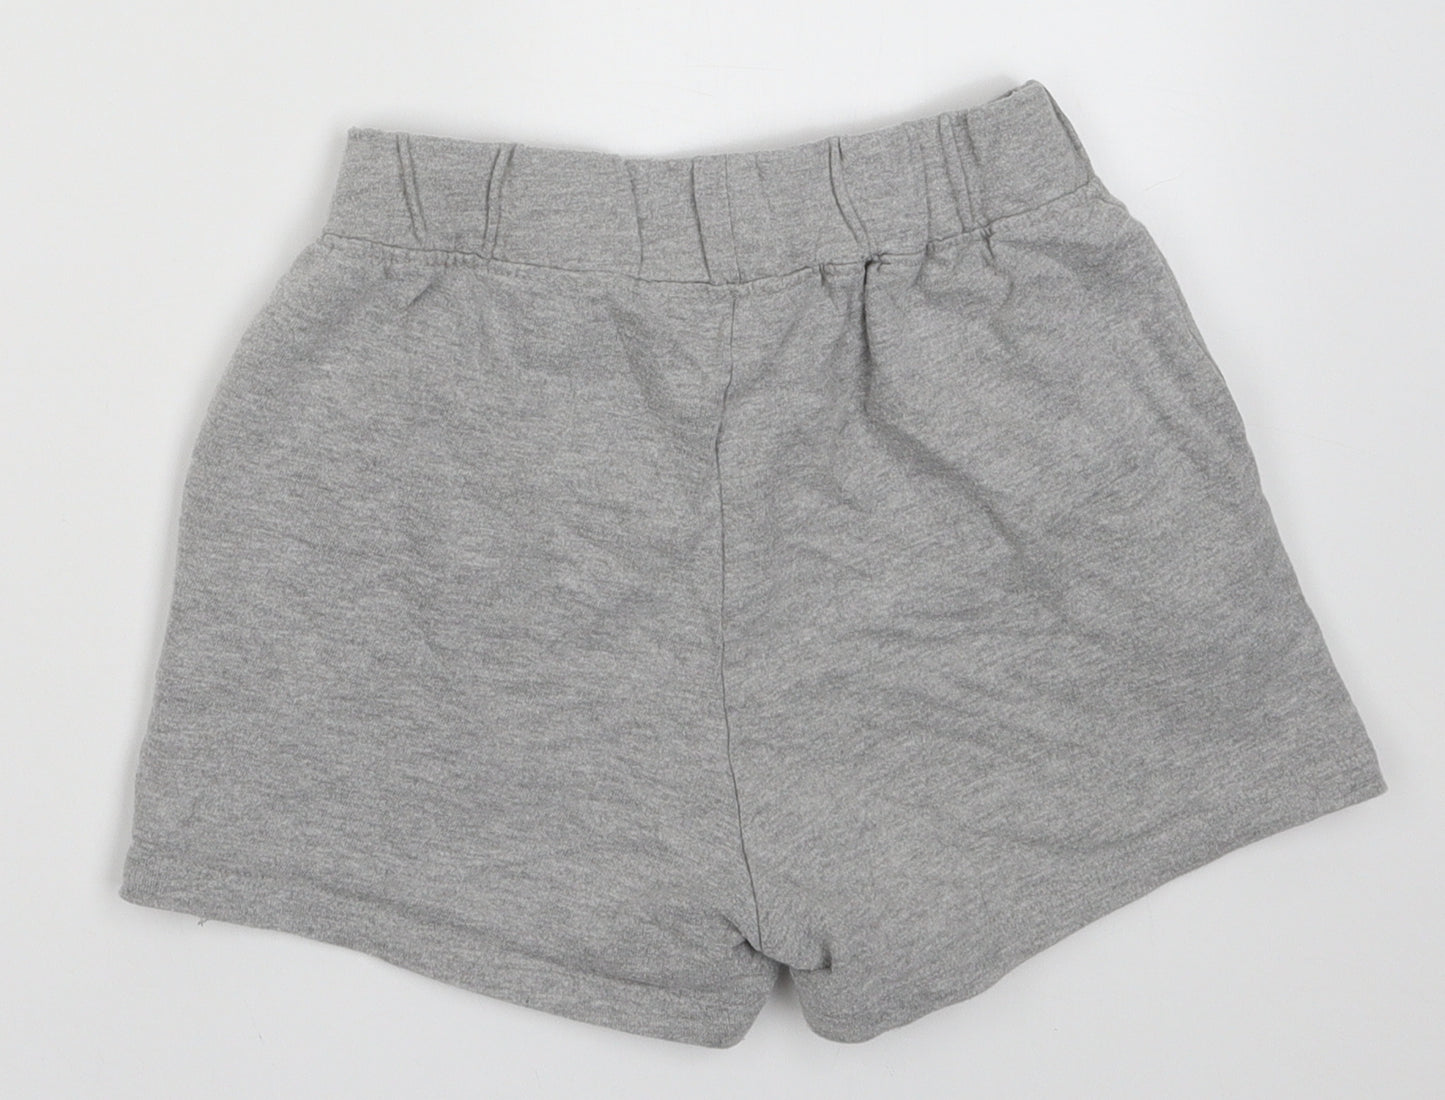 Jeff & Co  Girls Grey  Cotton Sweat Shorts Size 11-12 Years  Regular Tie